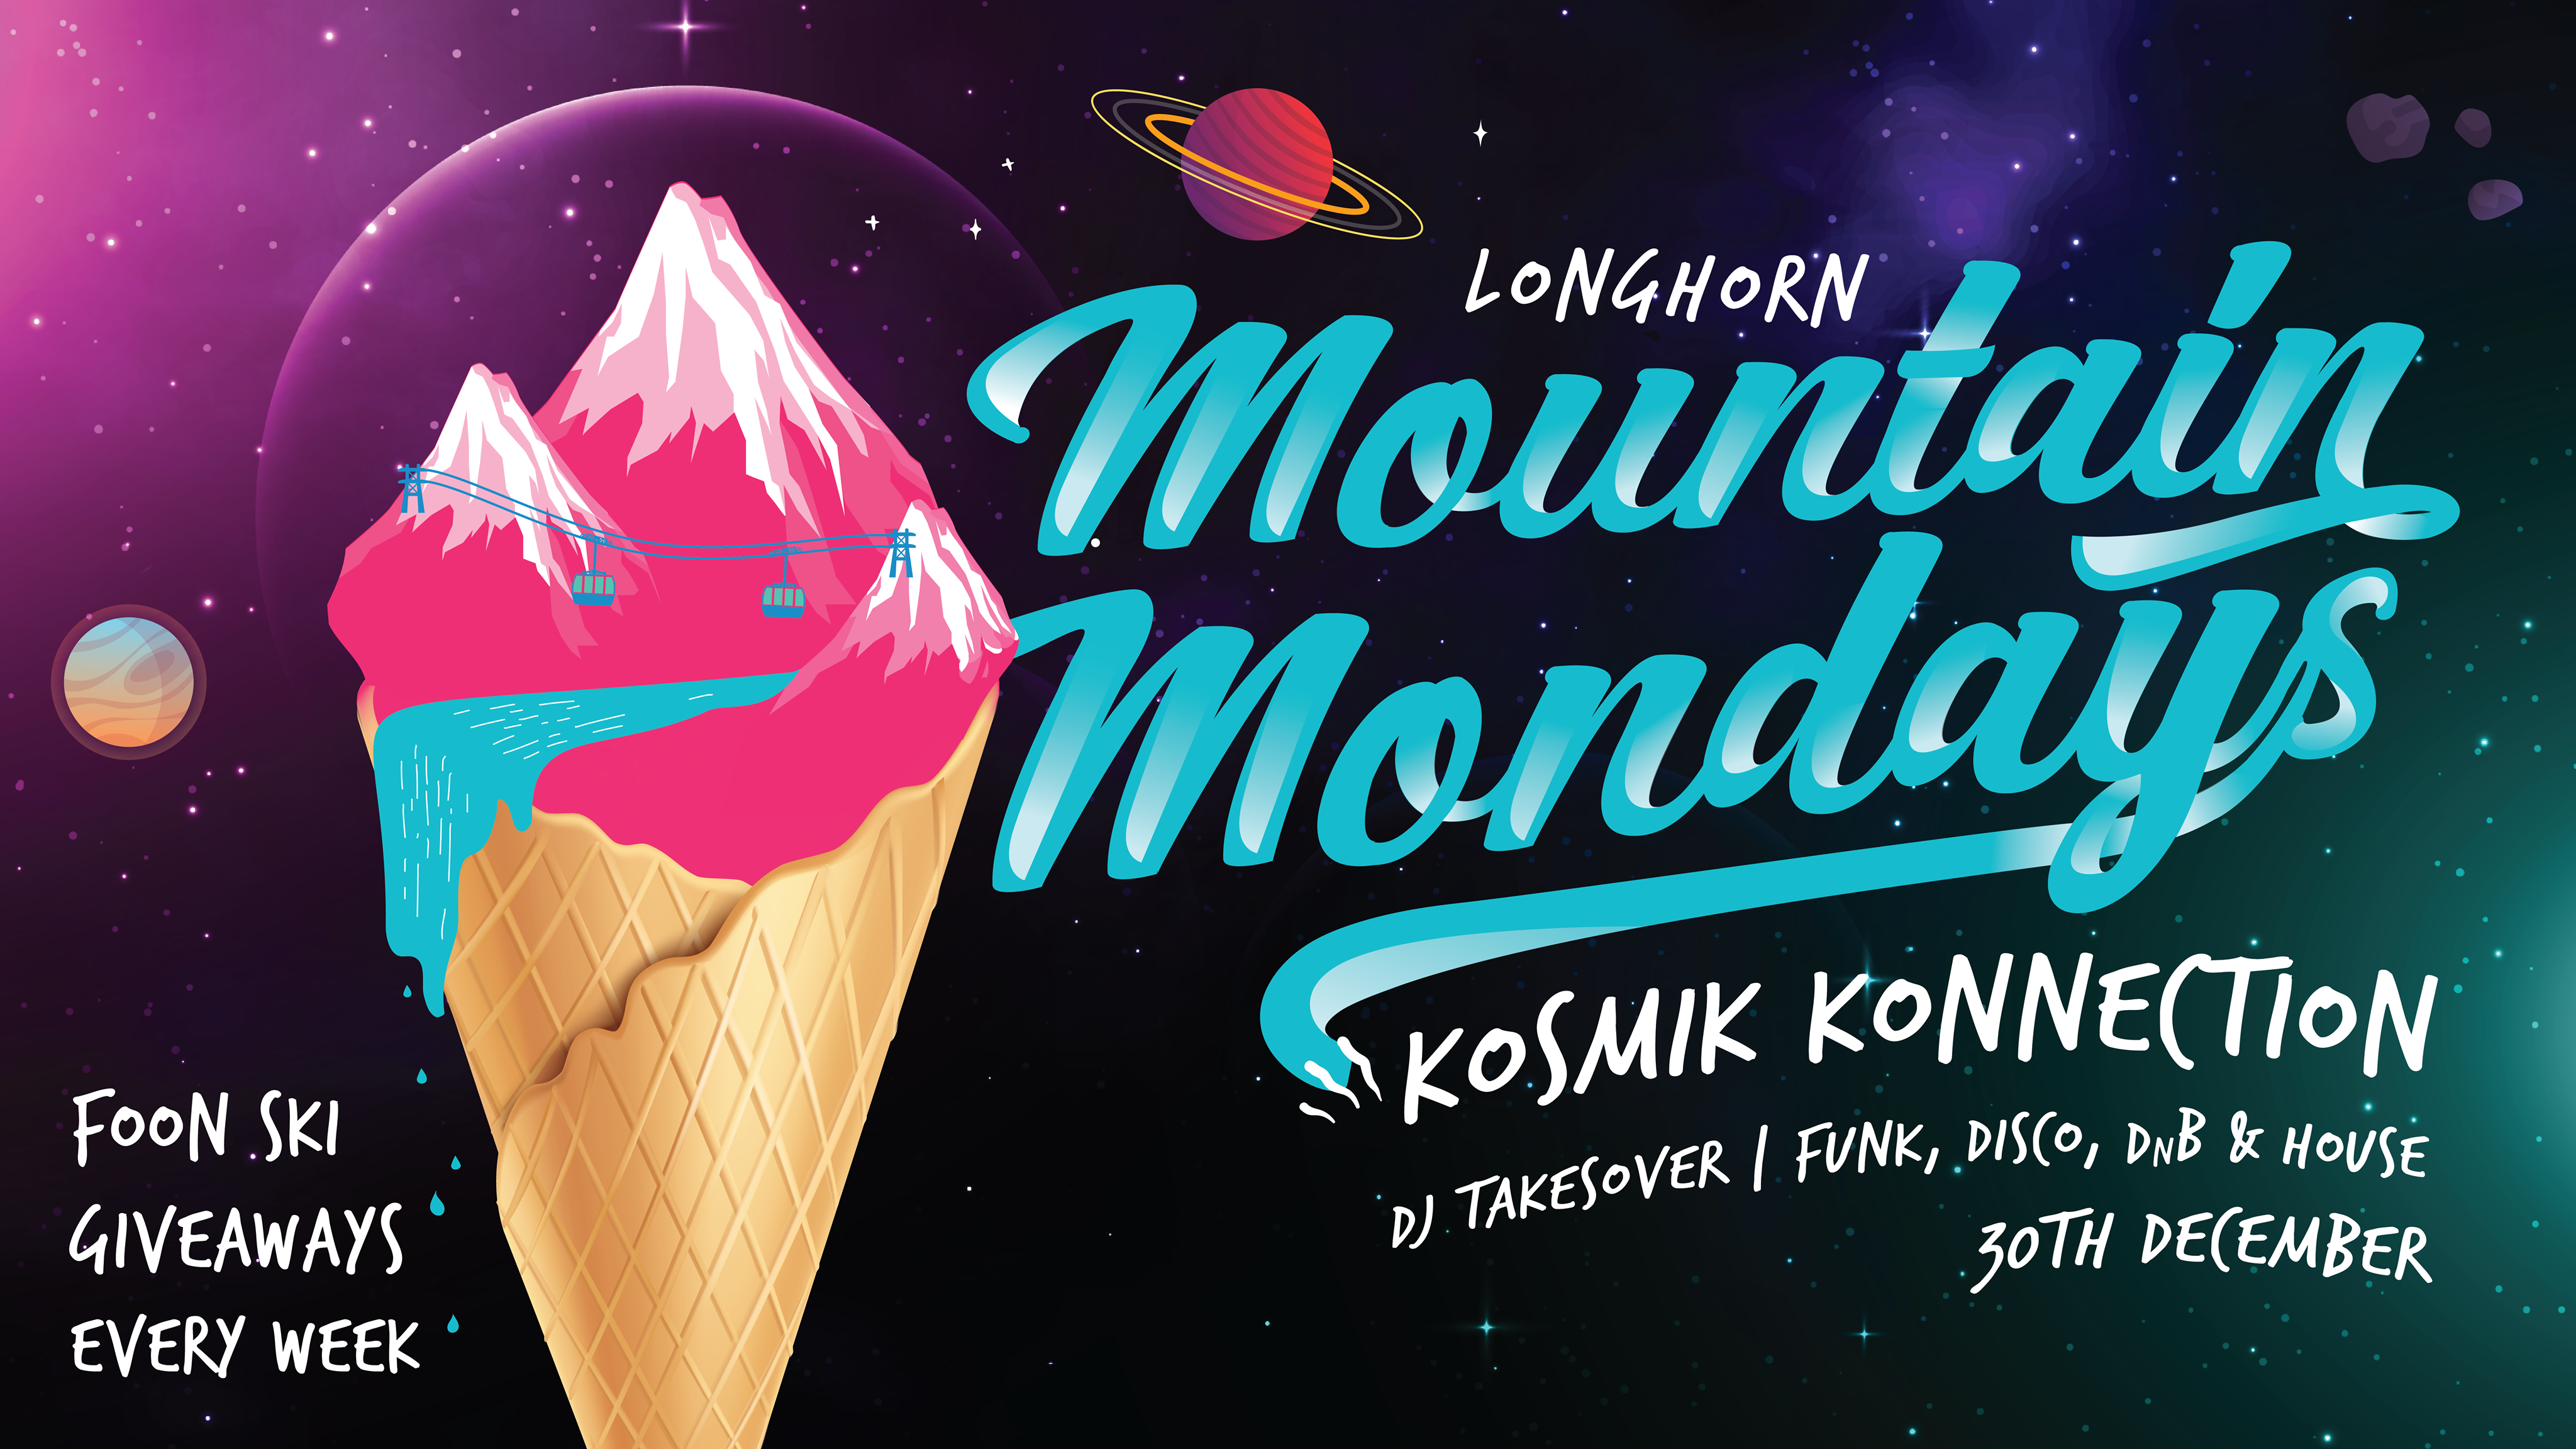 Mountain Mondays at Longhorn with The KosmiK Konnection.